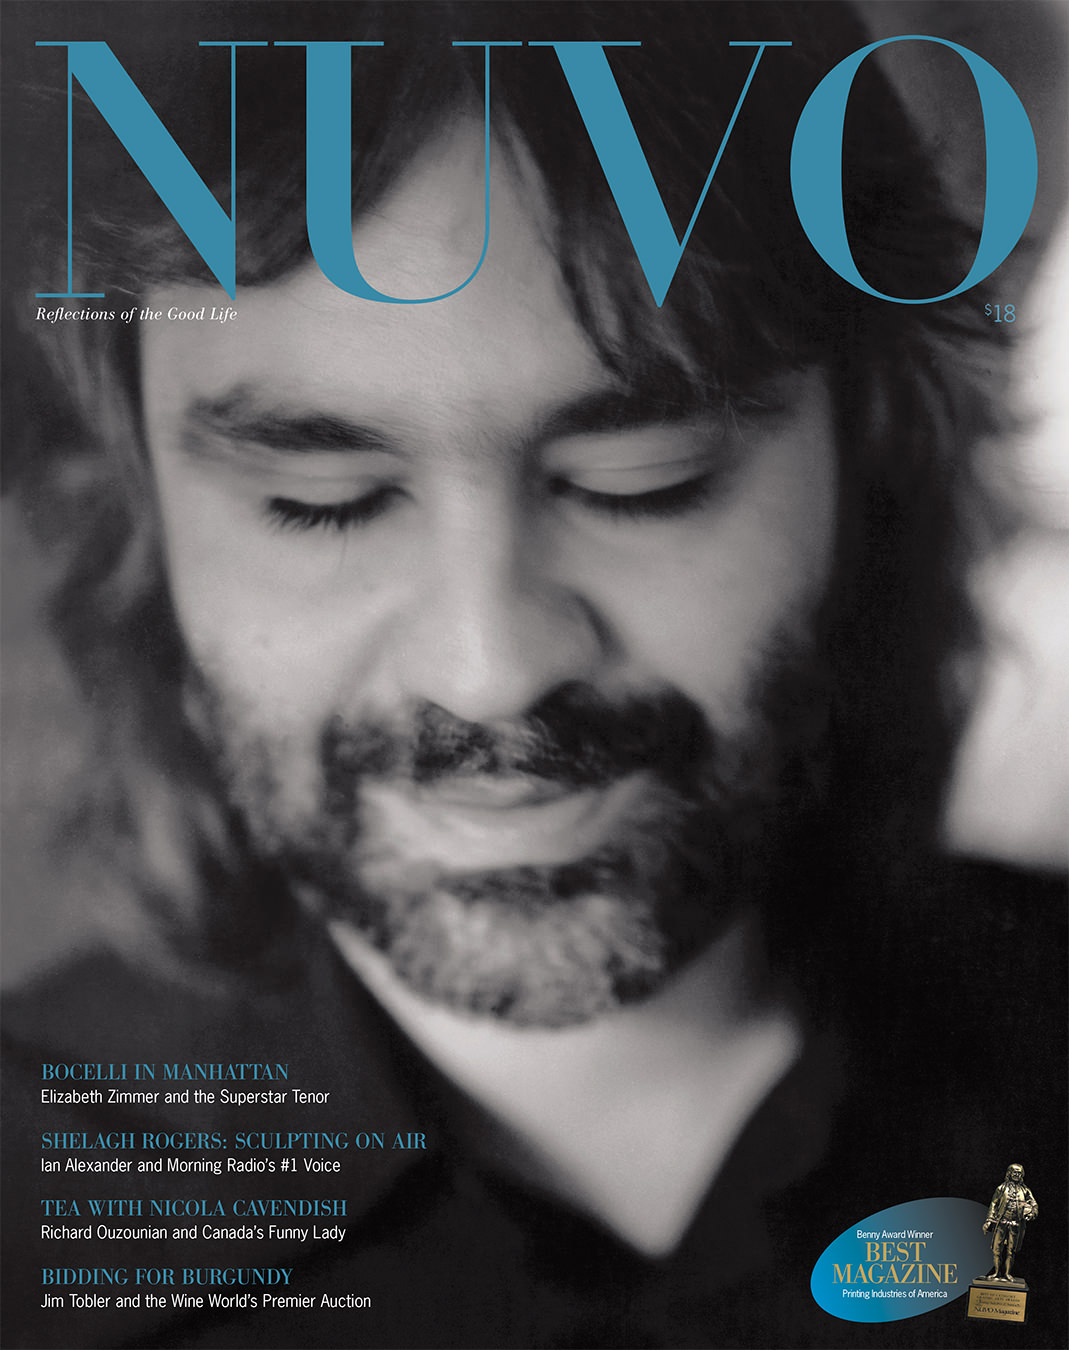 NUVO Magazine Spring 2001 Cover featuring Andrea Bocelli